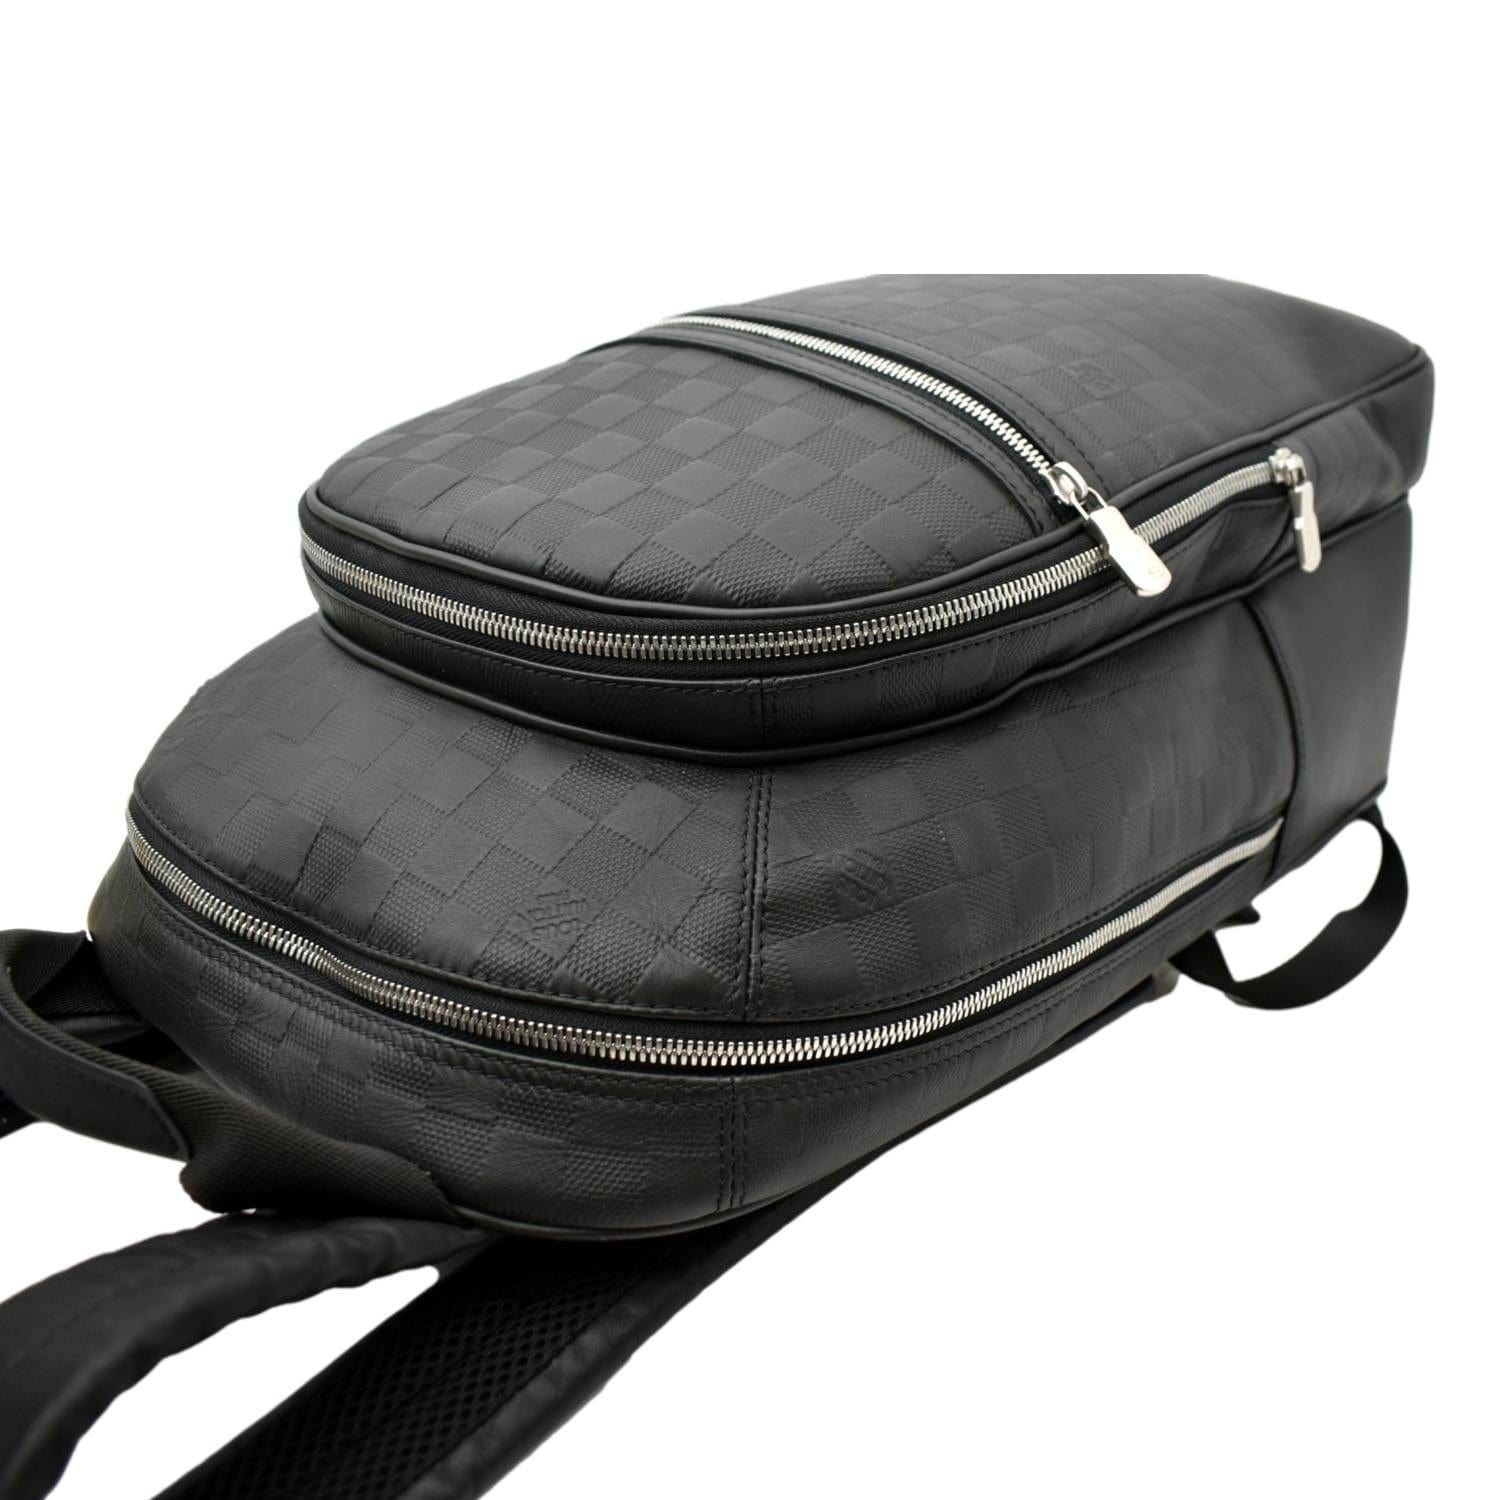 LOUIS VUITTON Michael Damier Infini Leather Backpack Bag Black